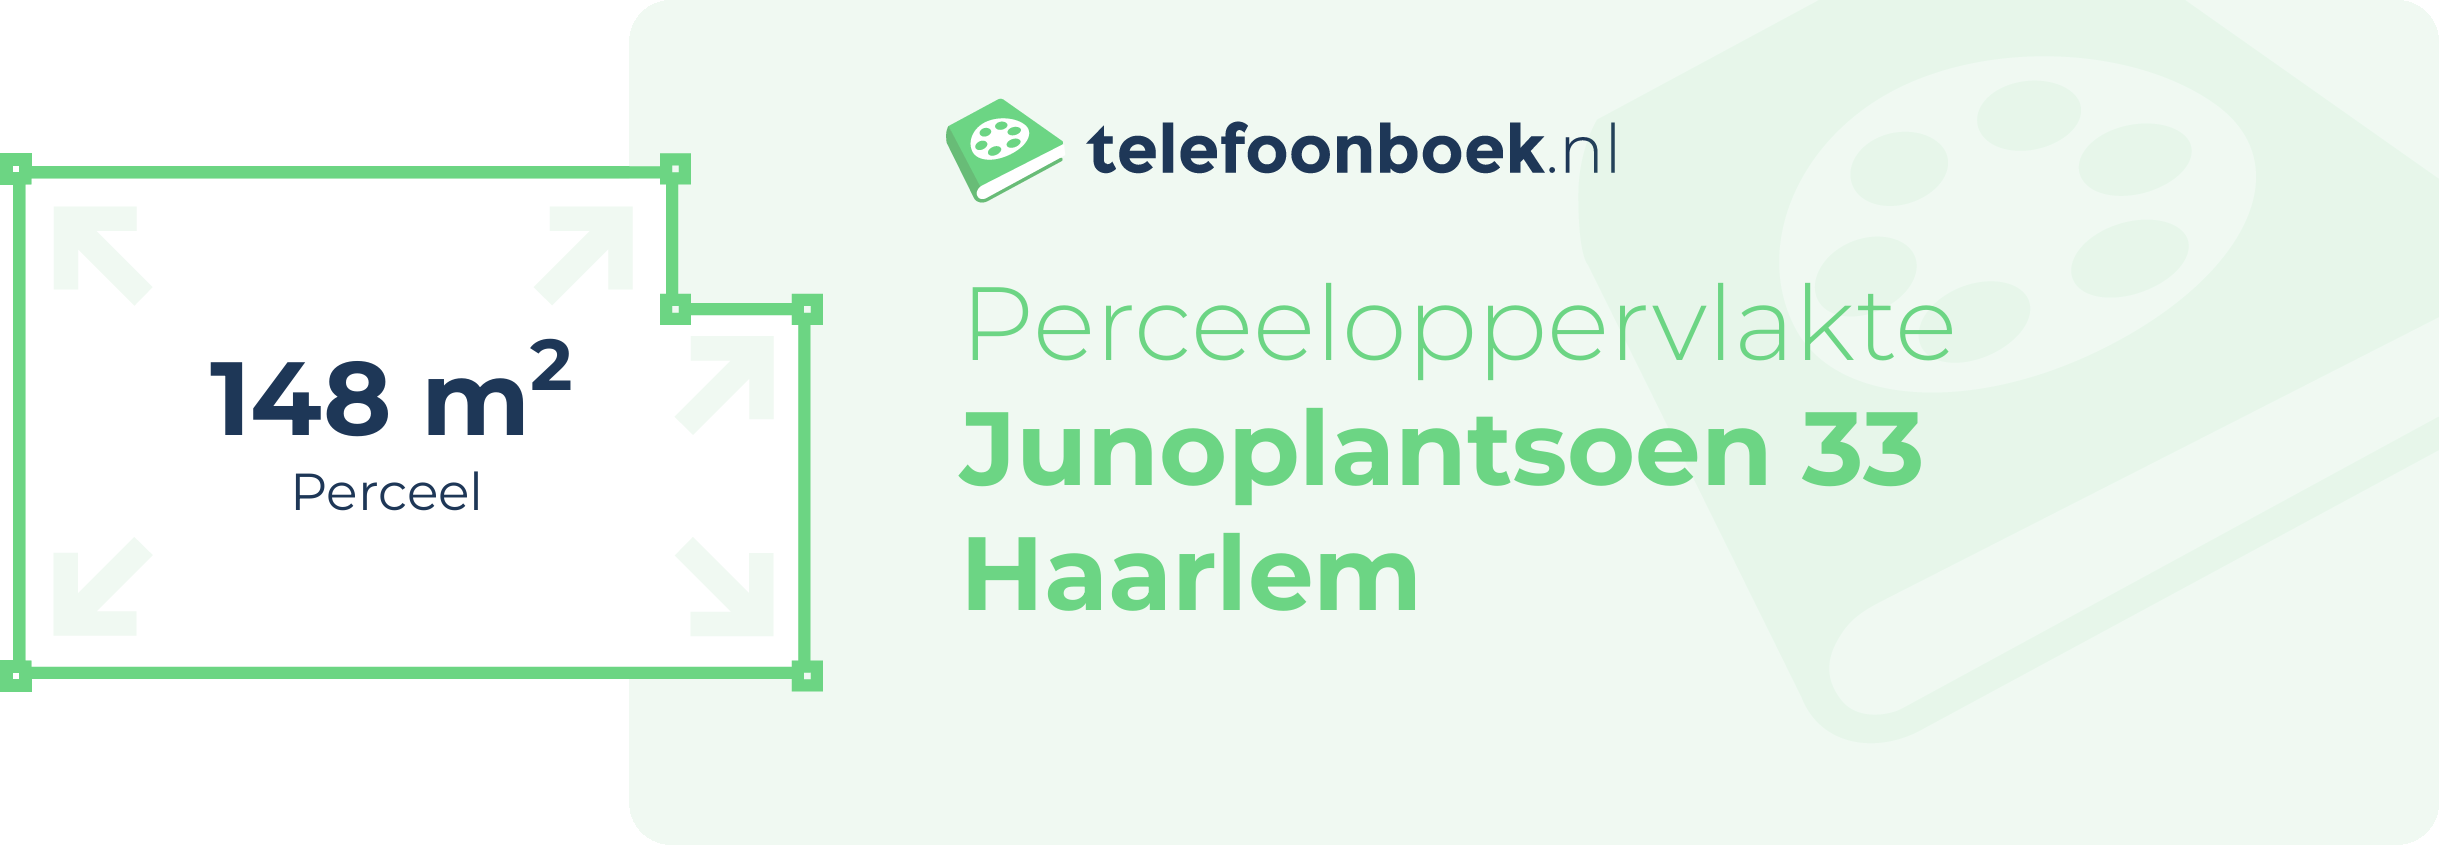 Perceeloppervlakte Junoplantsoen 33 Haarlem